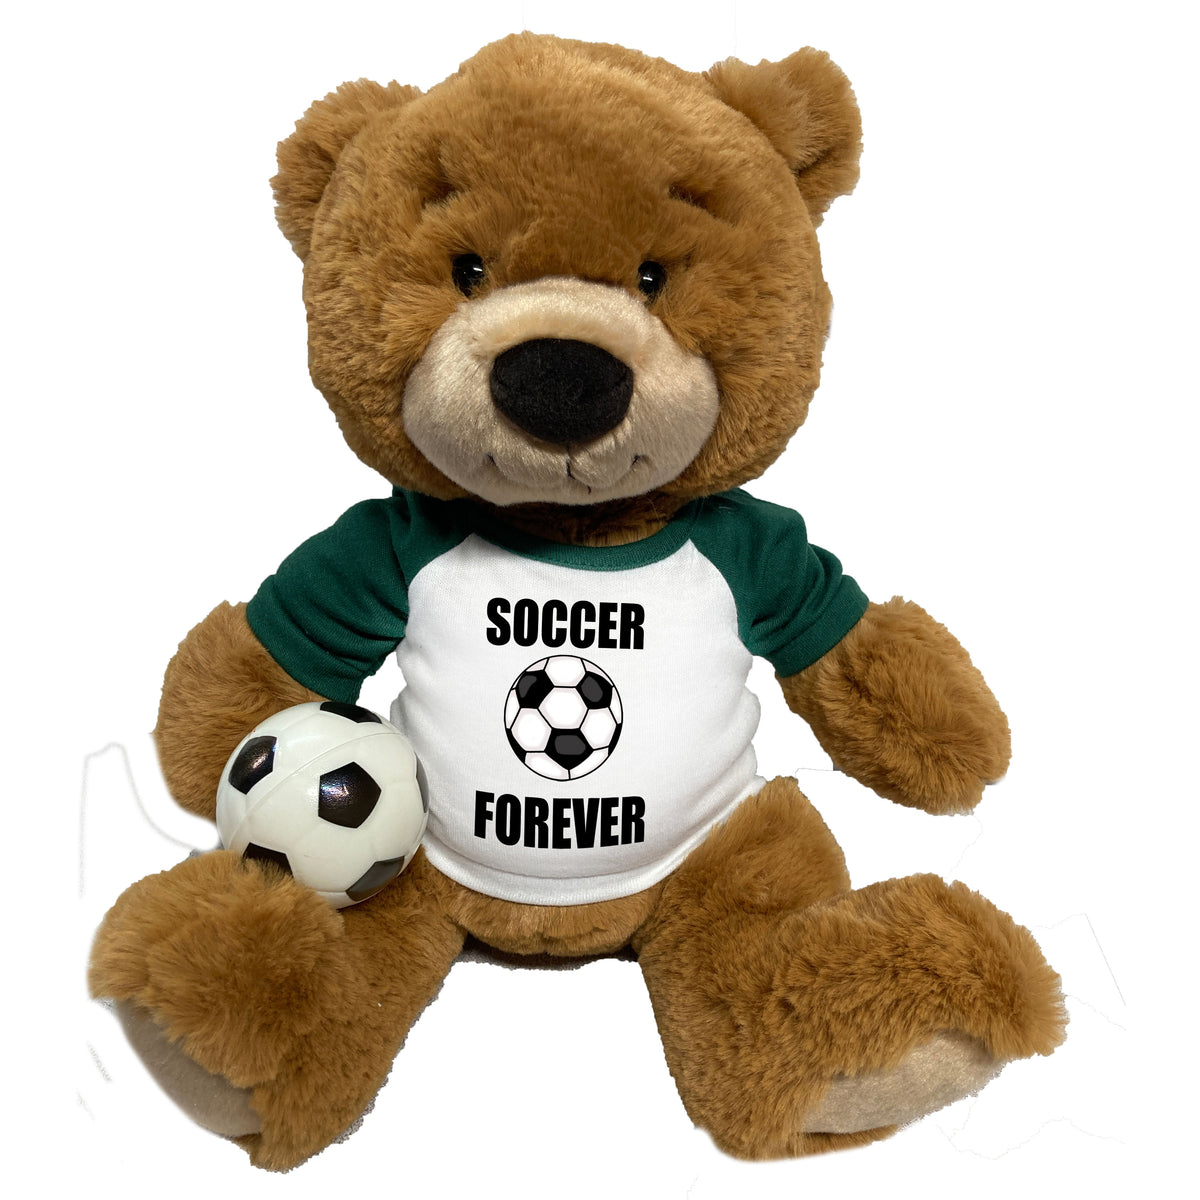 Soccer Teddy Bear - Personalized 14" Ginger Bear